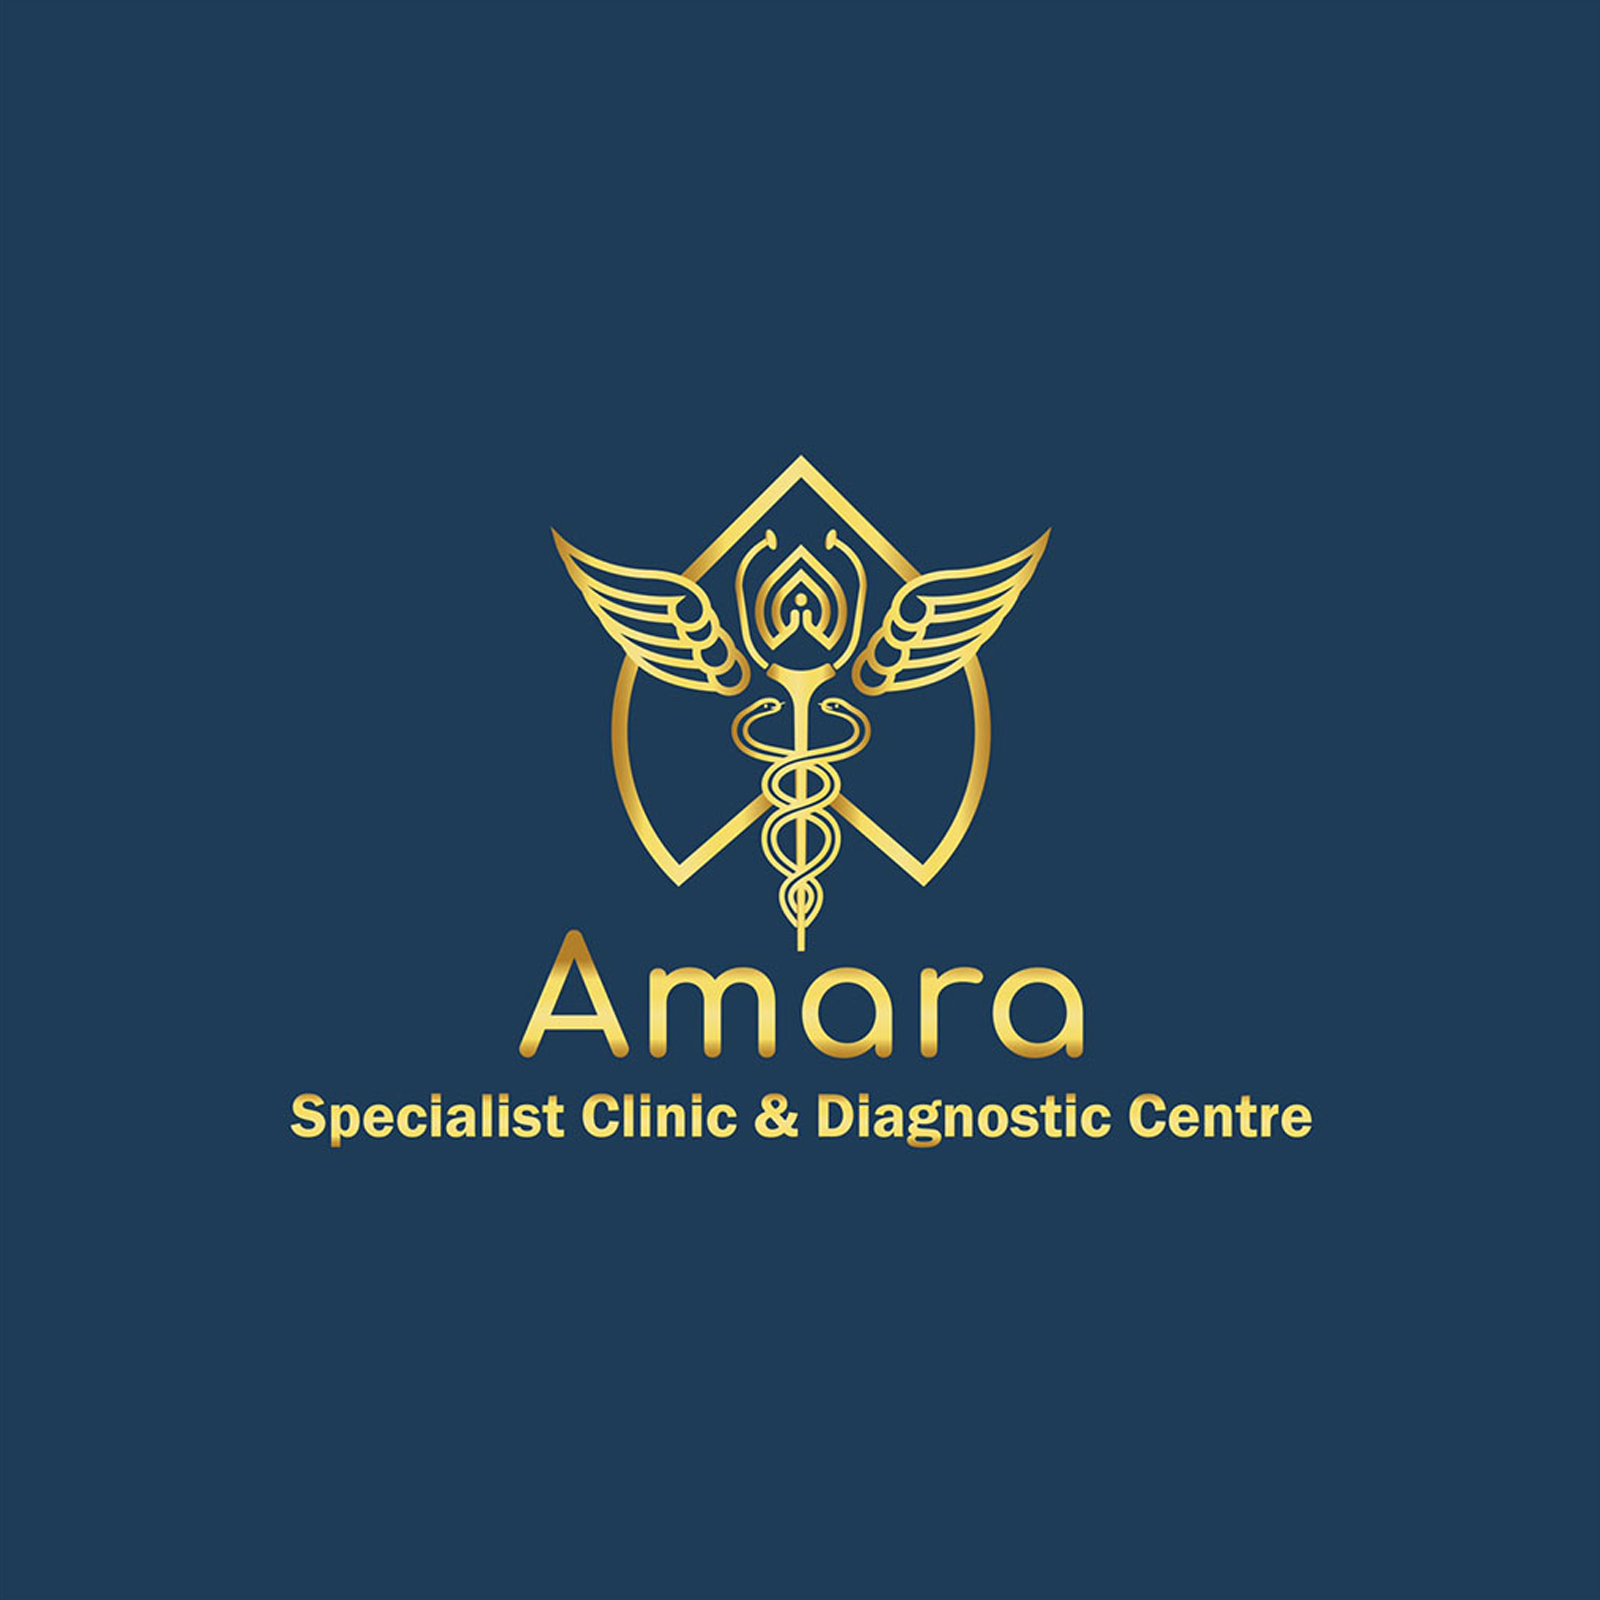 Amara Specialist Clinic